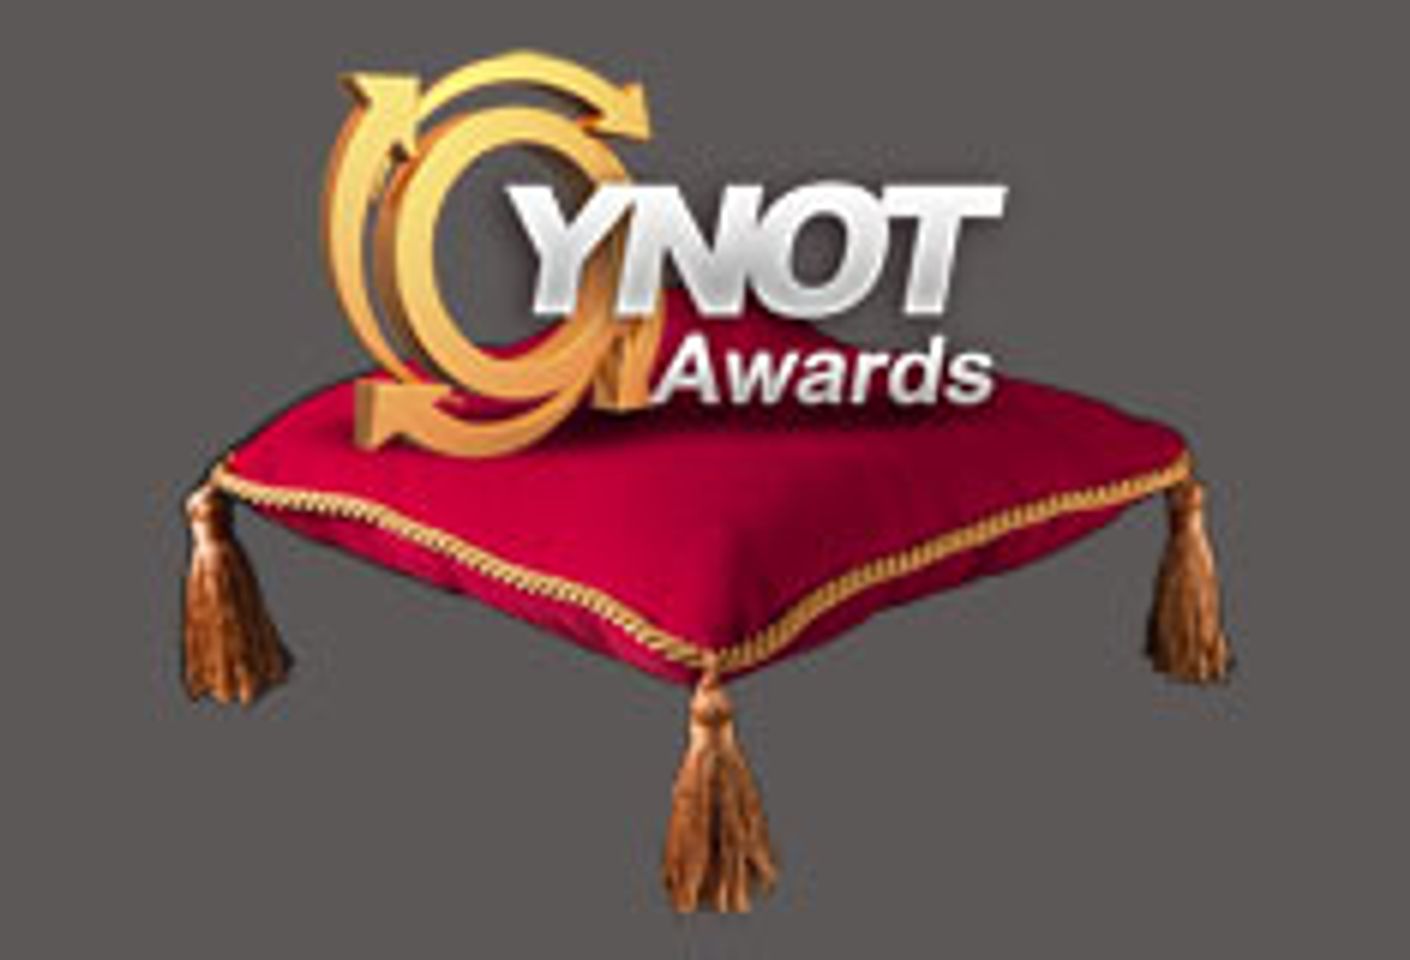 YNOT Awards Return to Club Sasazu and European Summit in September